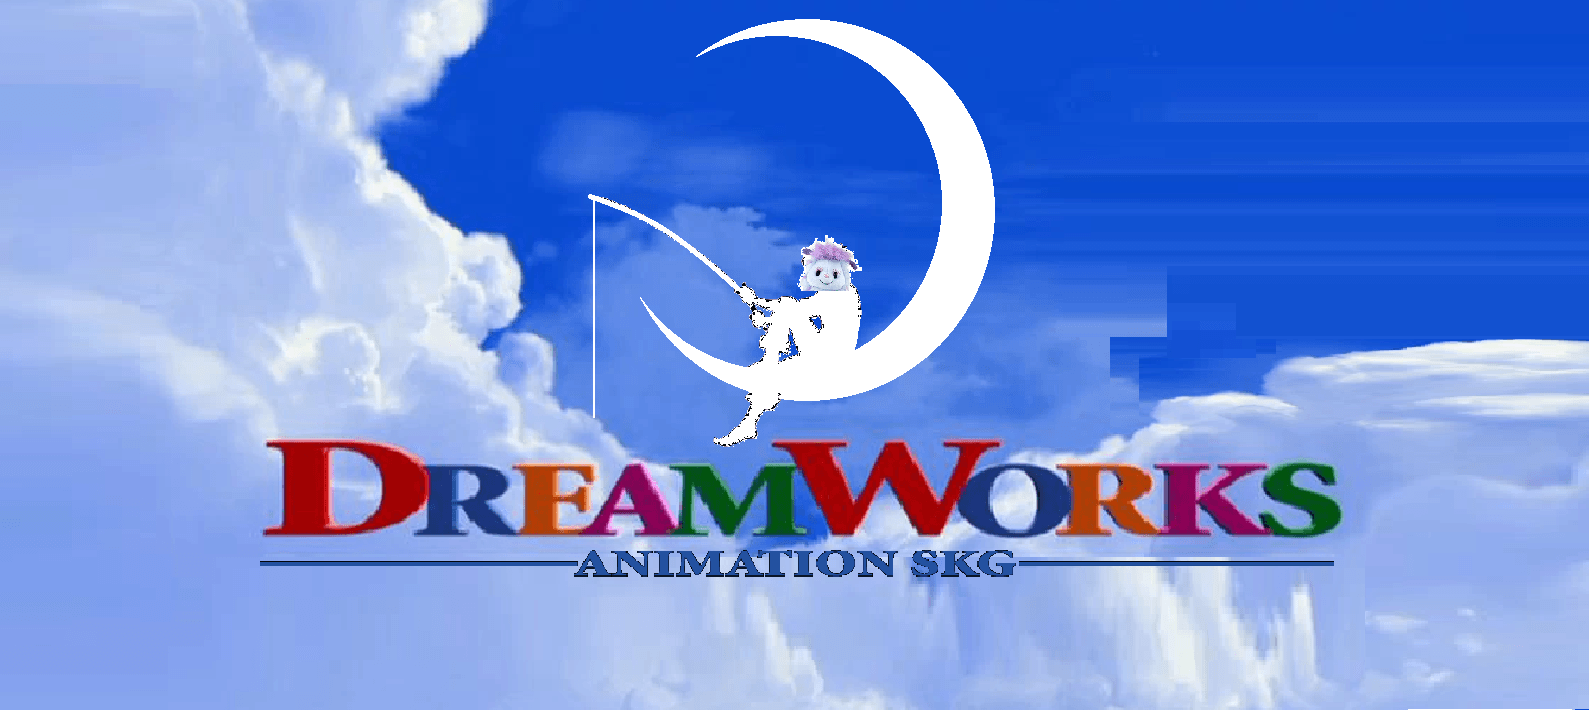 DreamWorks Animation Logo - Image - DreamWorks Animation logo (Barbie Version).png | The Idea ...